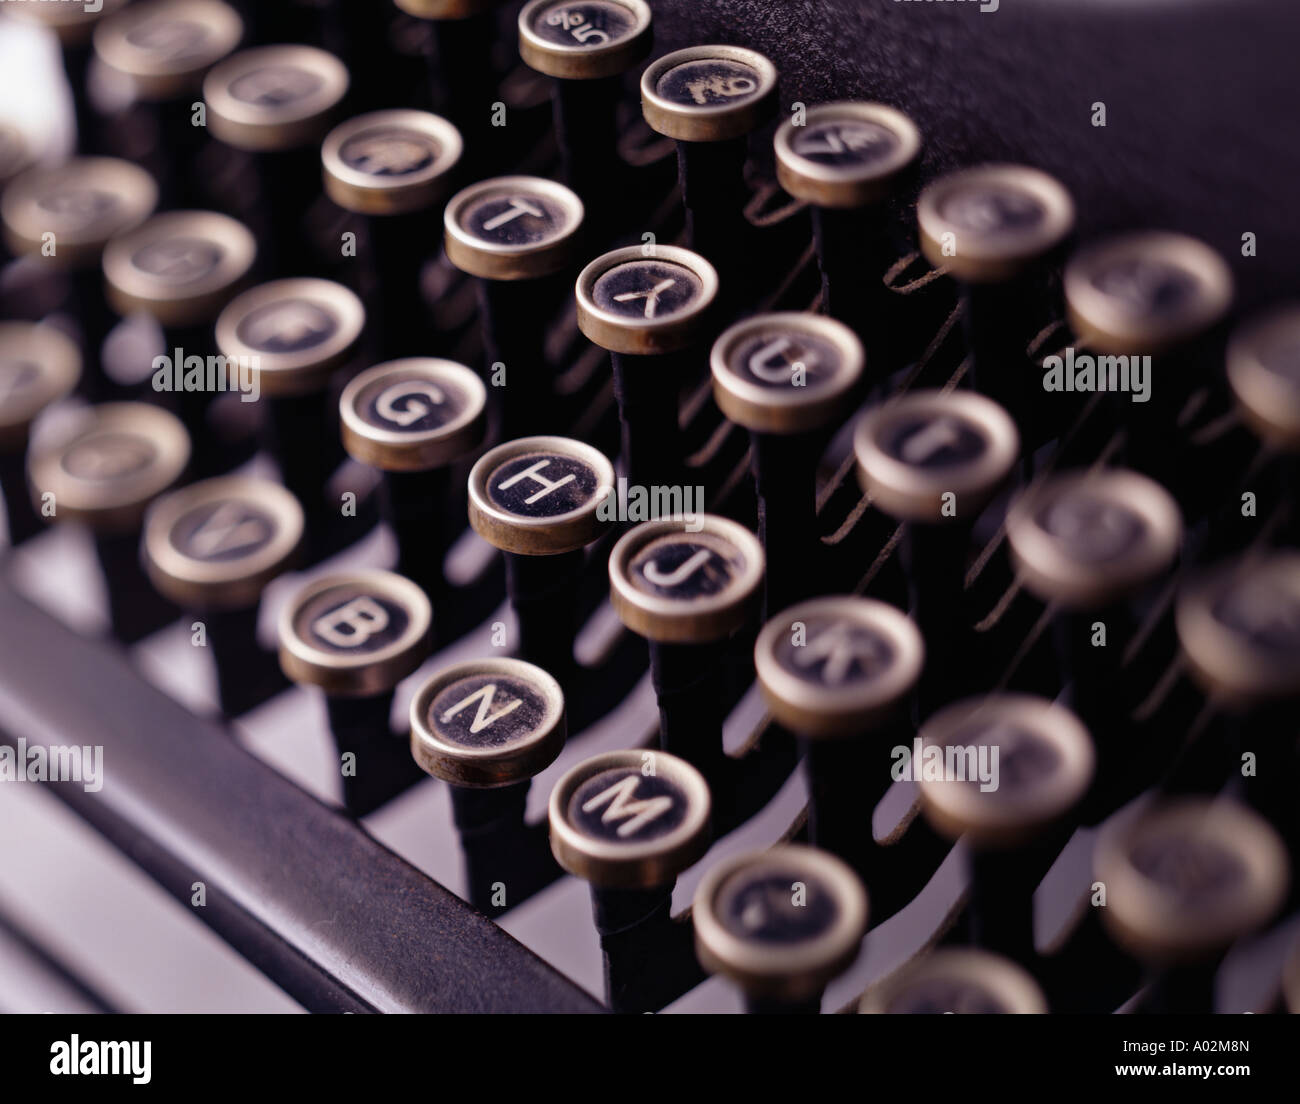 antique typewriter keys Stock Photo